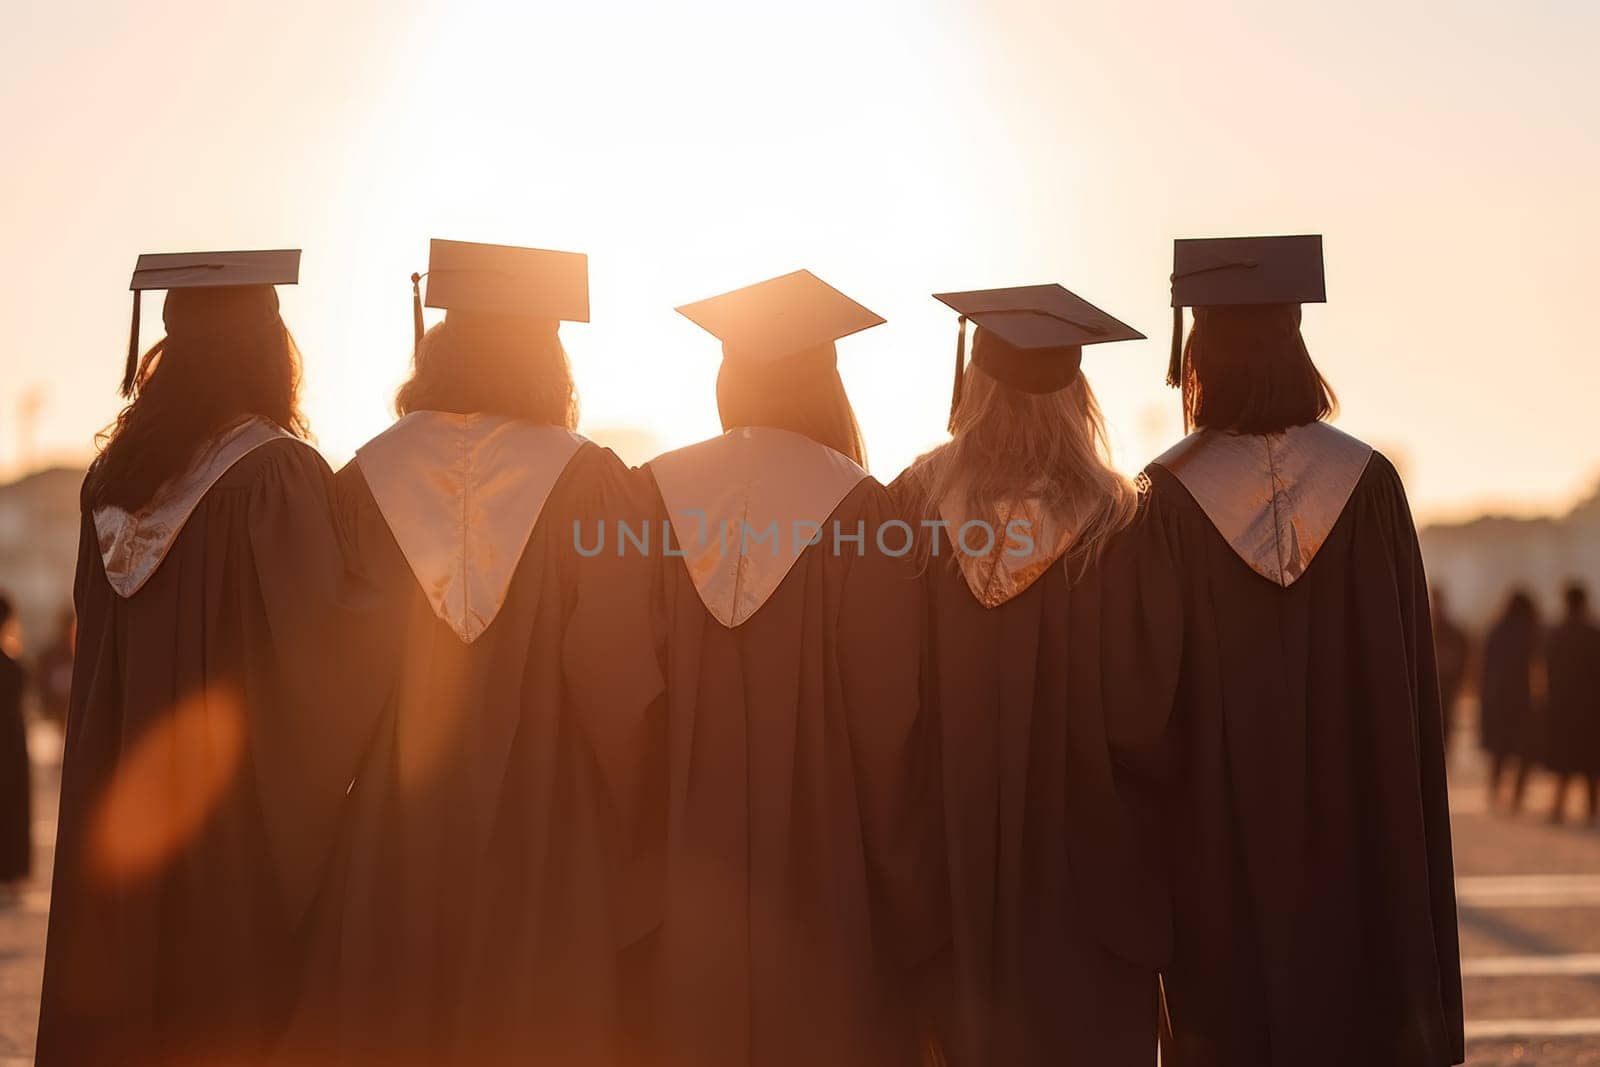 Golden Hour Graduates by andreyz